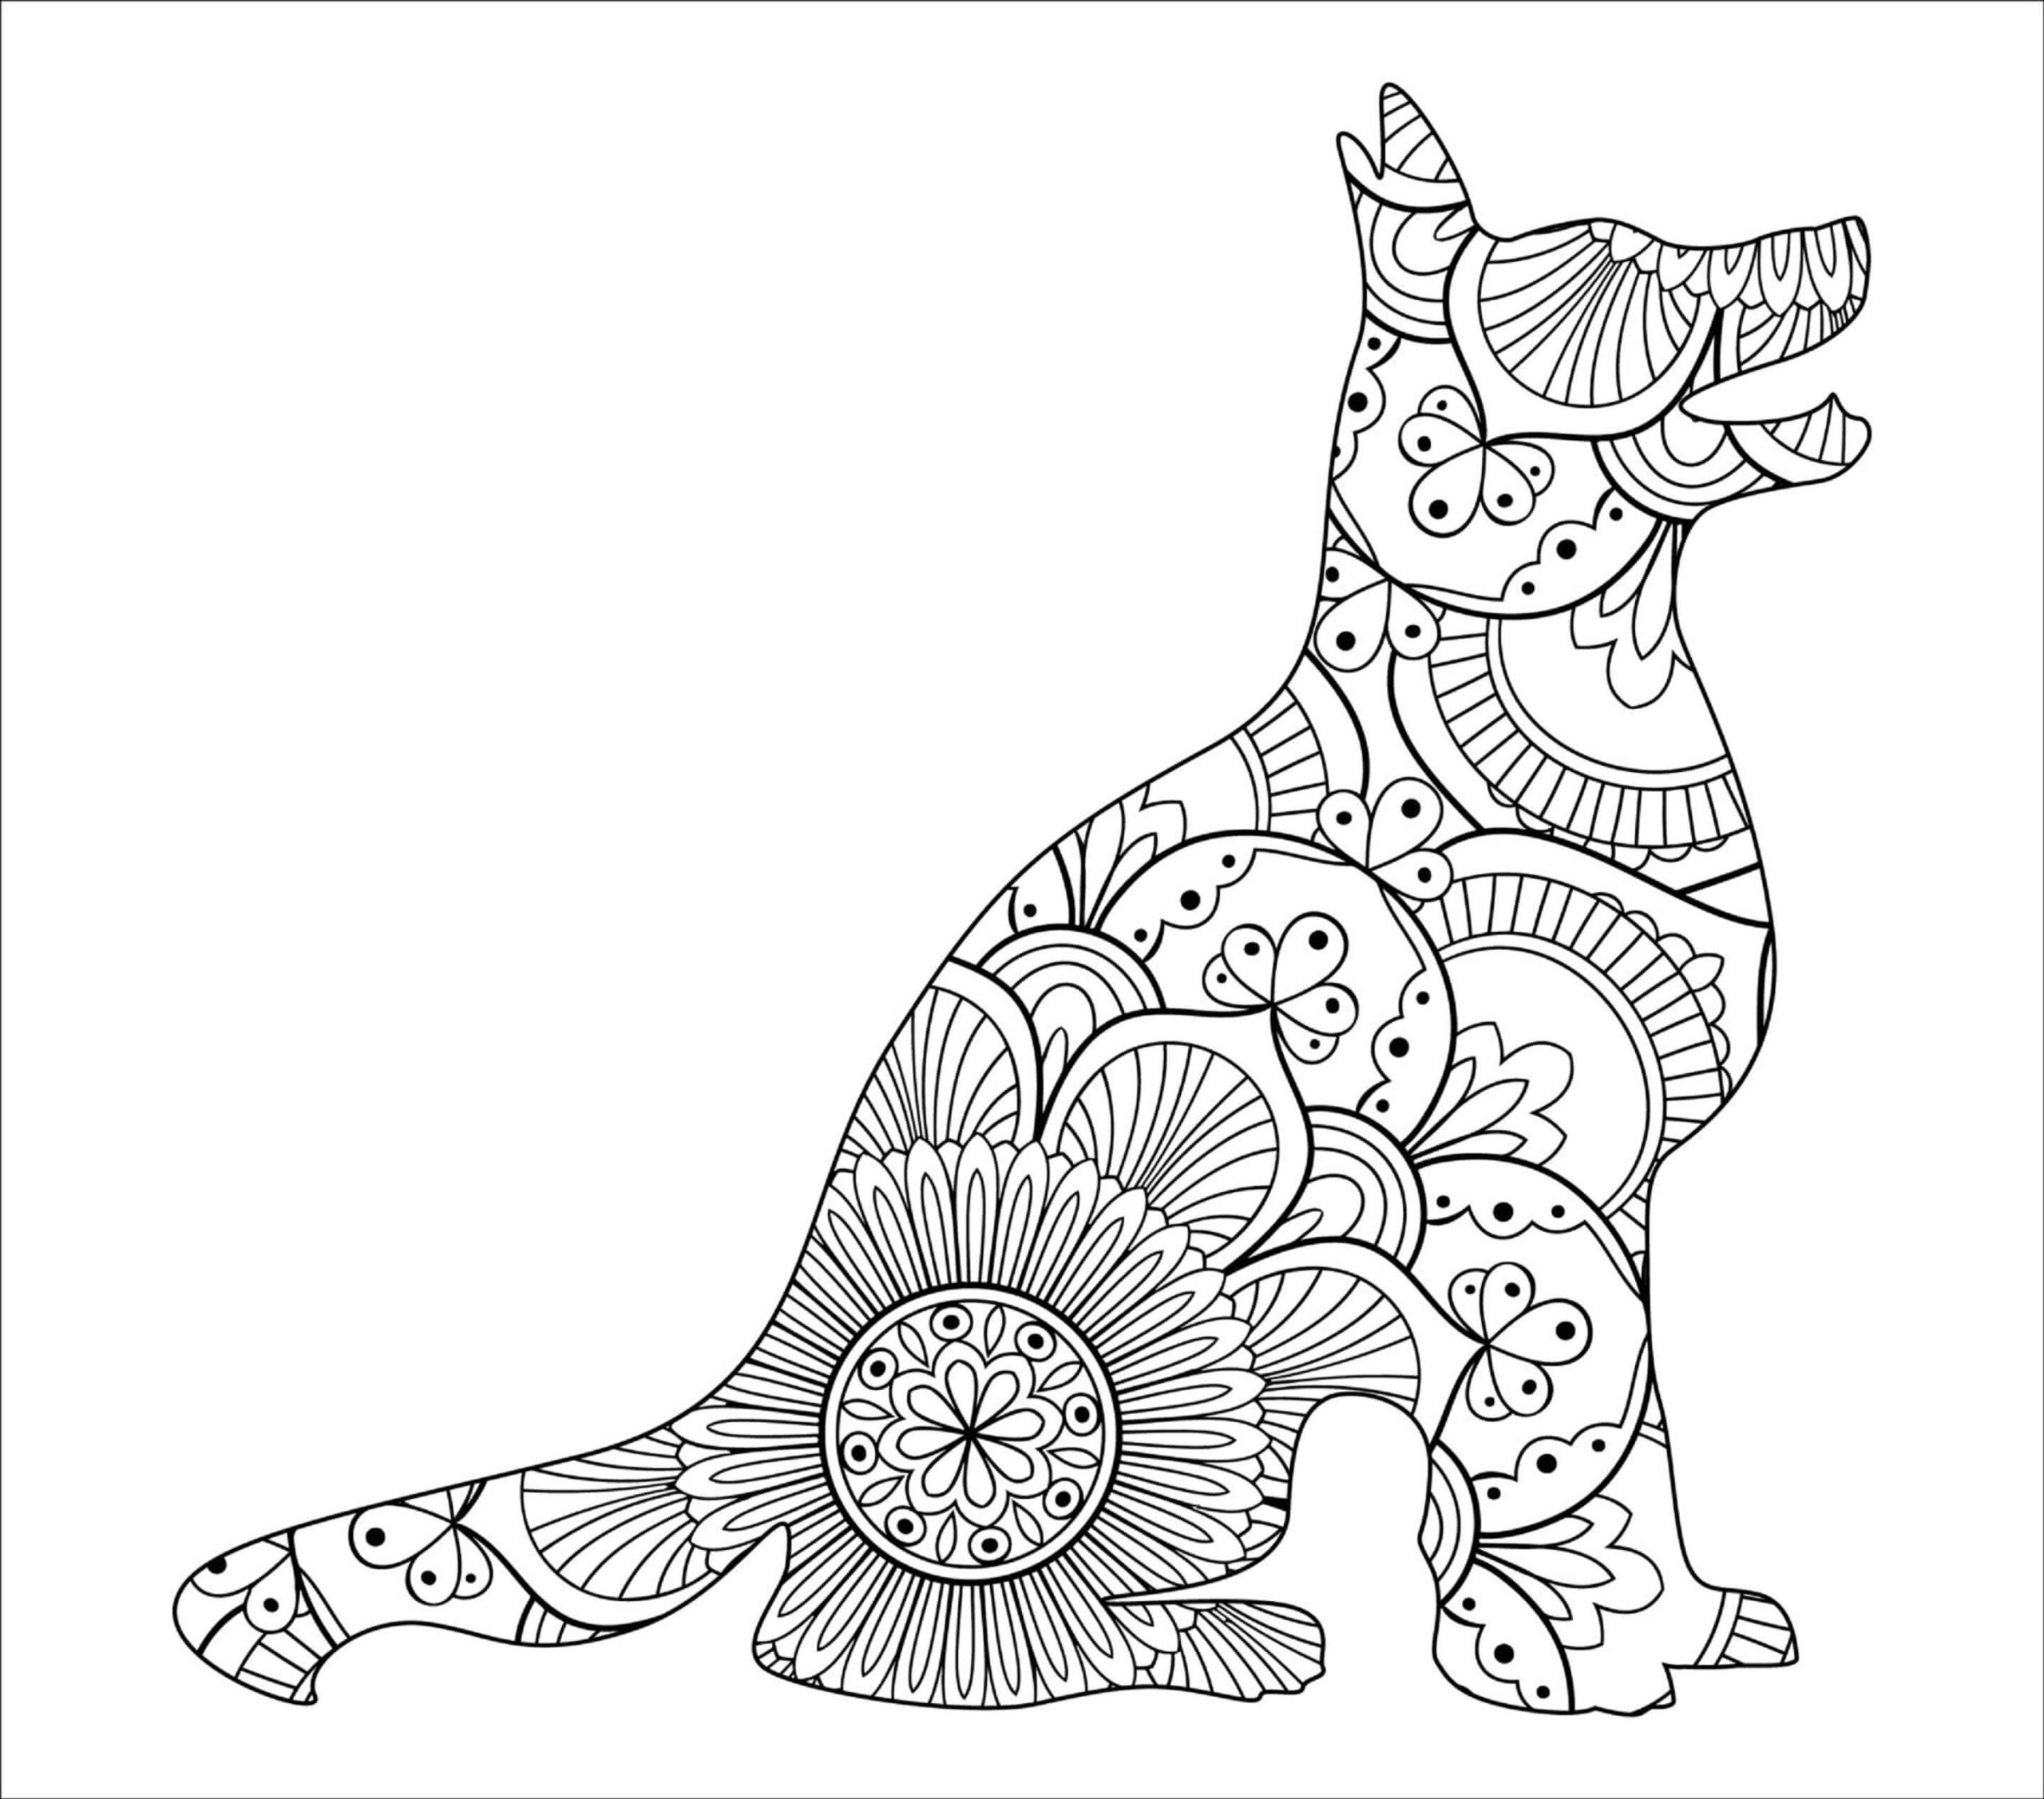 Mandala Dog Coloring Page – Sheet 1 Mandala